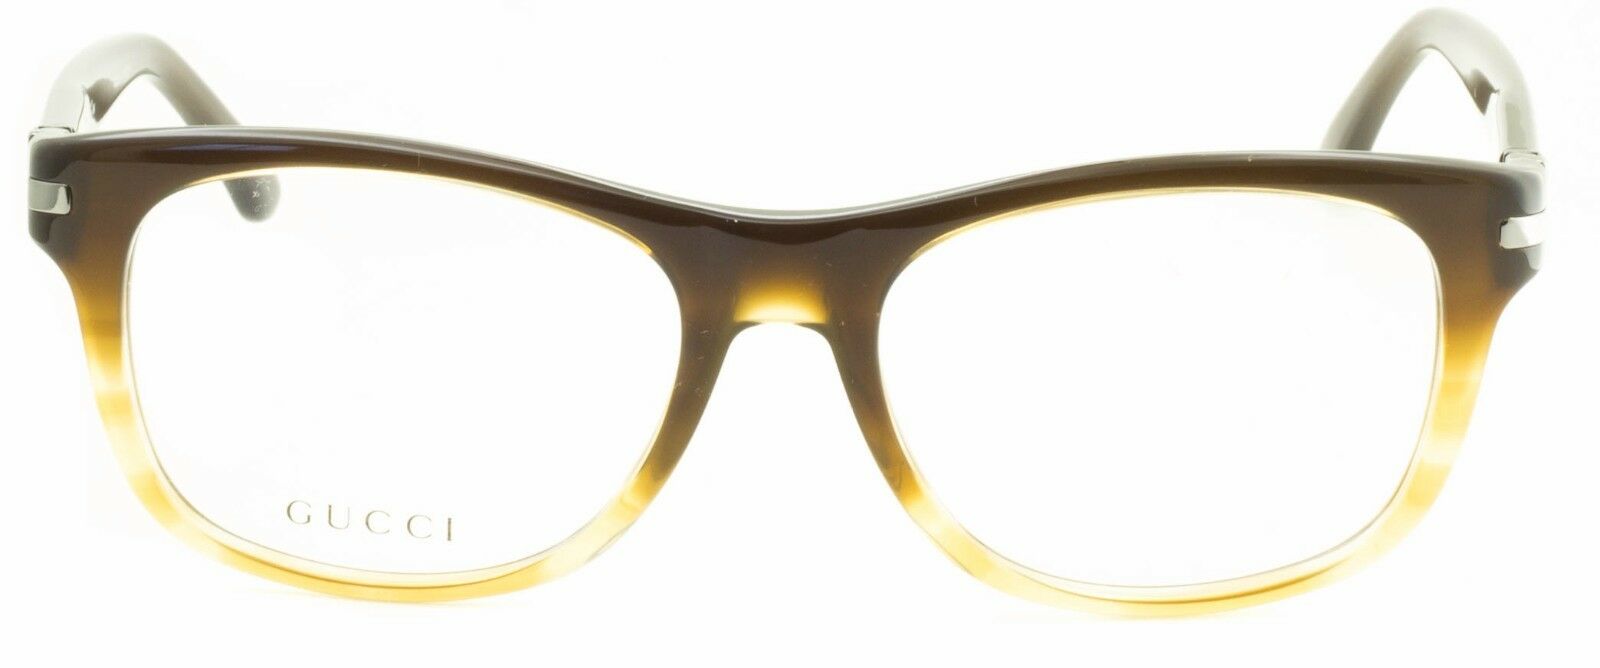 GUCCI GG 1052 E49 53mm Eyewear FRAMES RX Optical Glasses Eyeglasses New - Italy